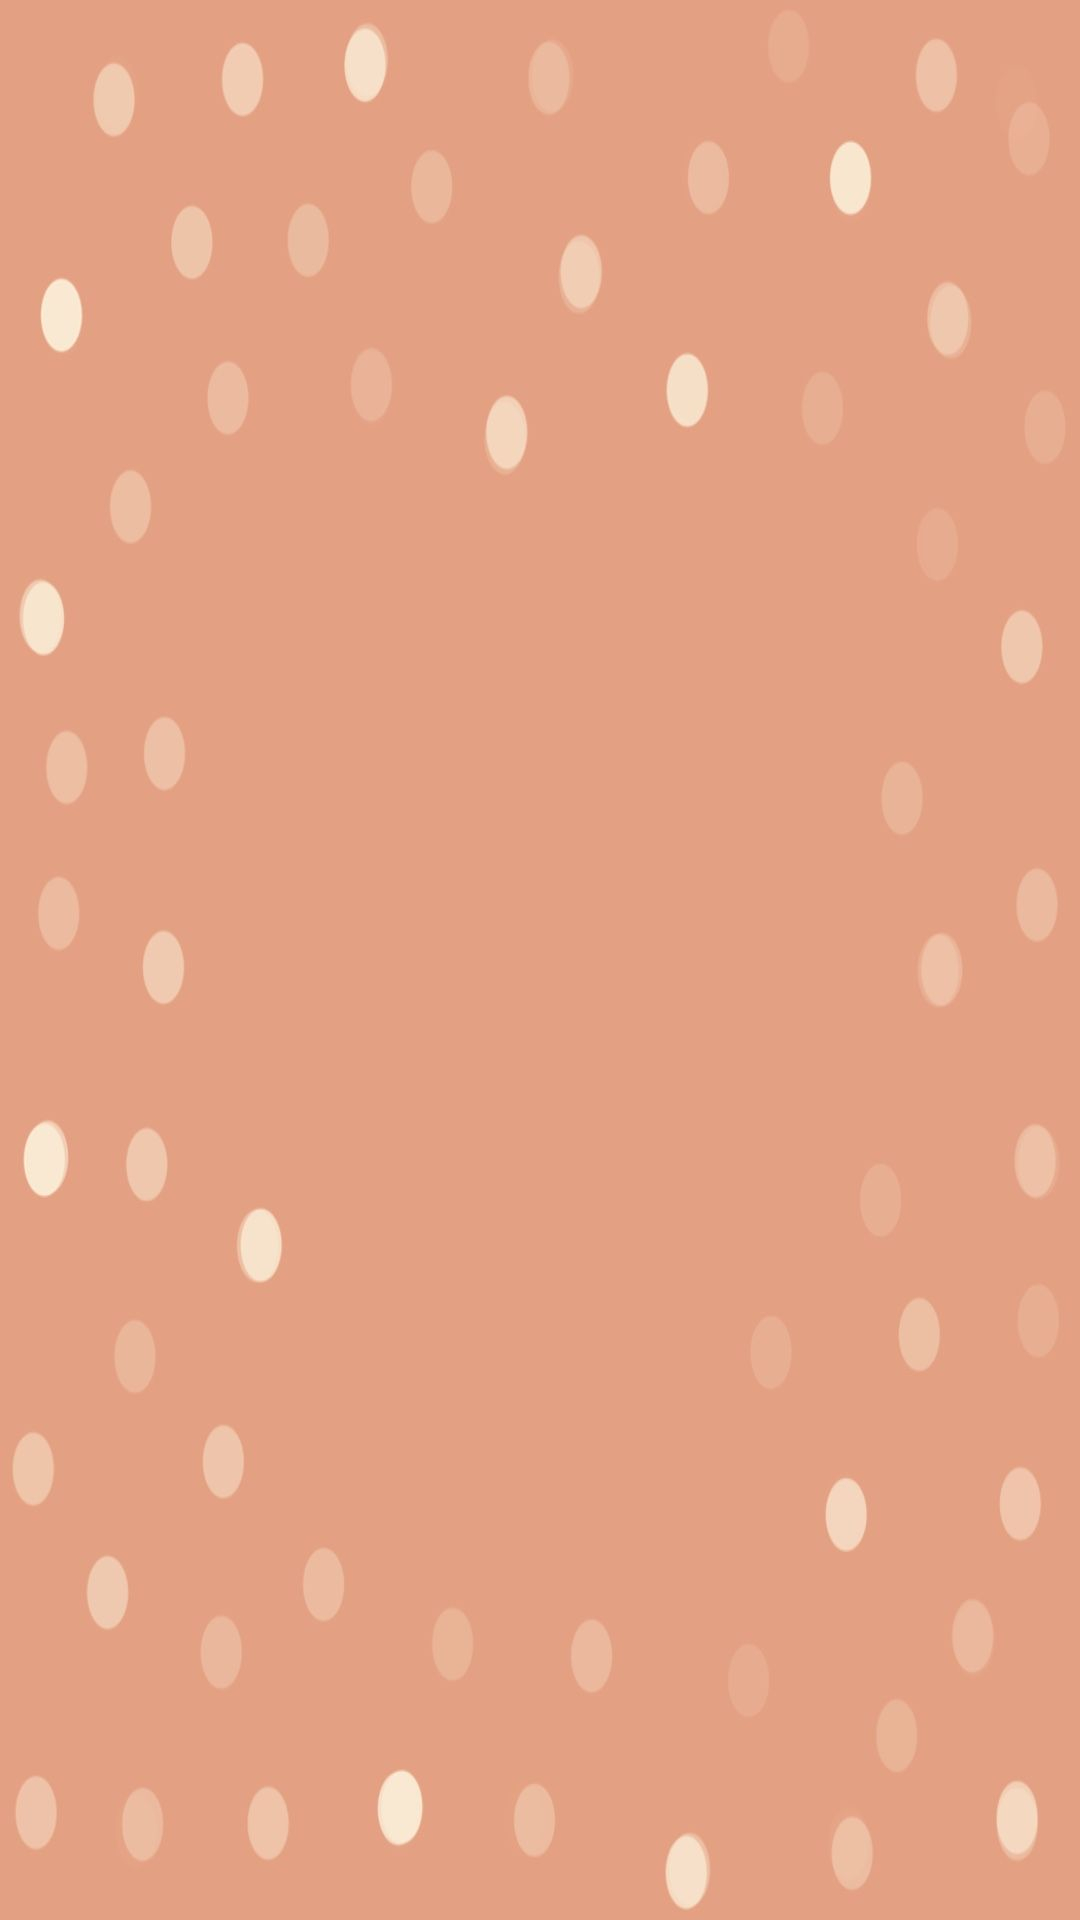 1080x1920 Fun Background | Polka dot background, Wallpaper backgrounds, Background